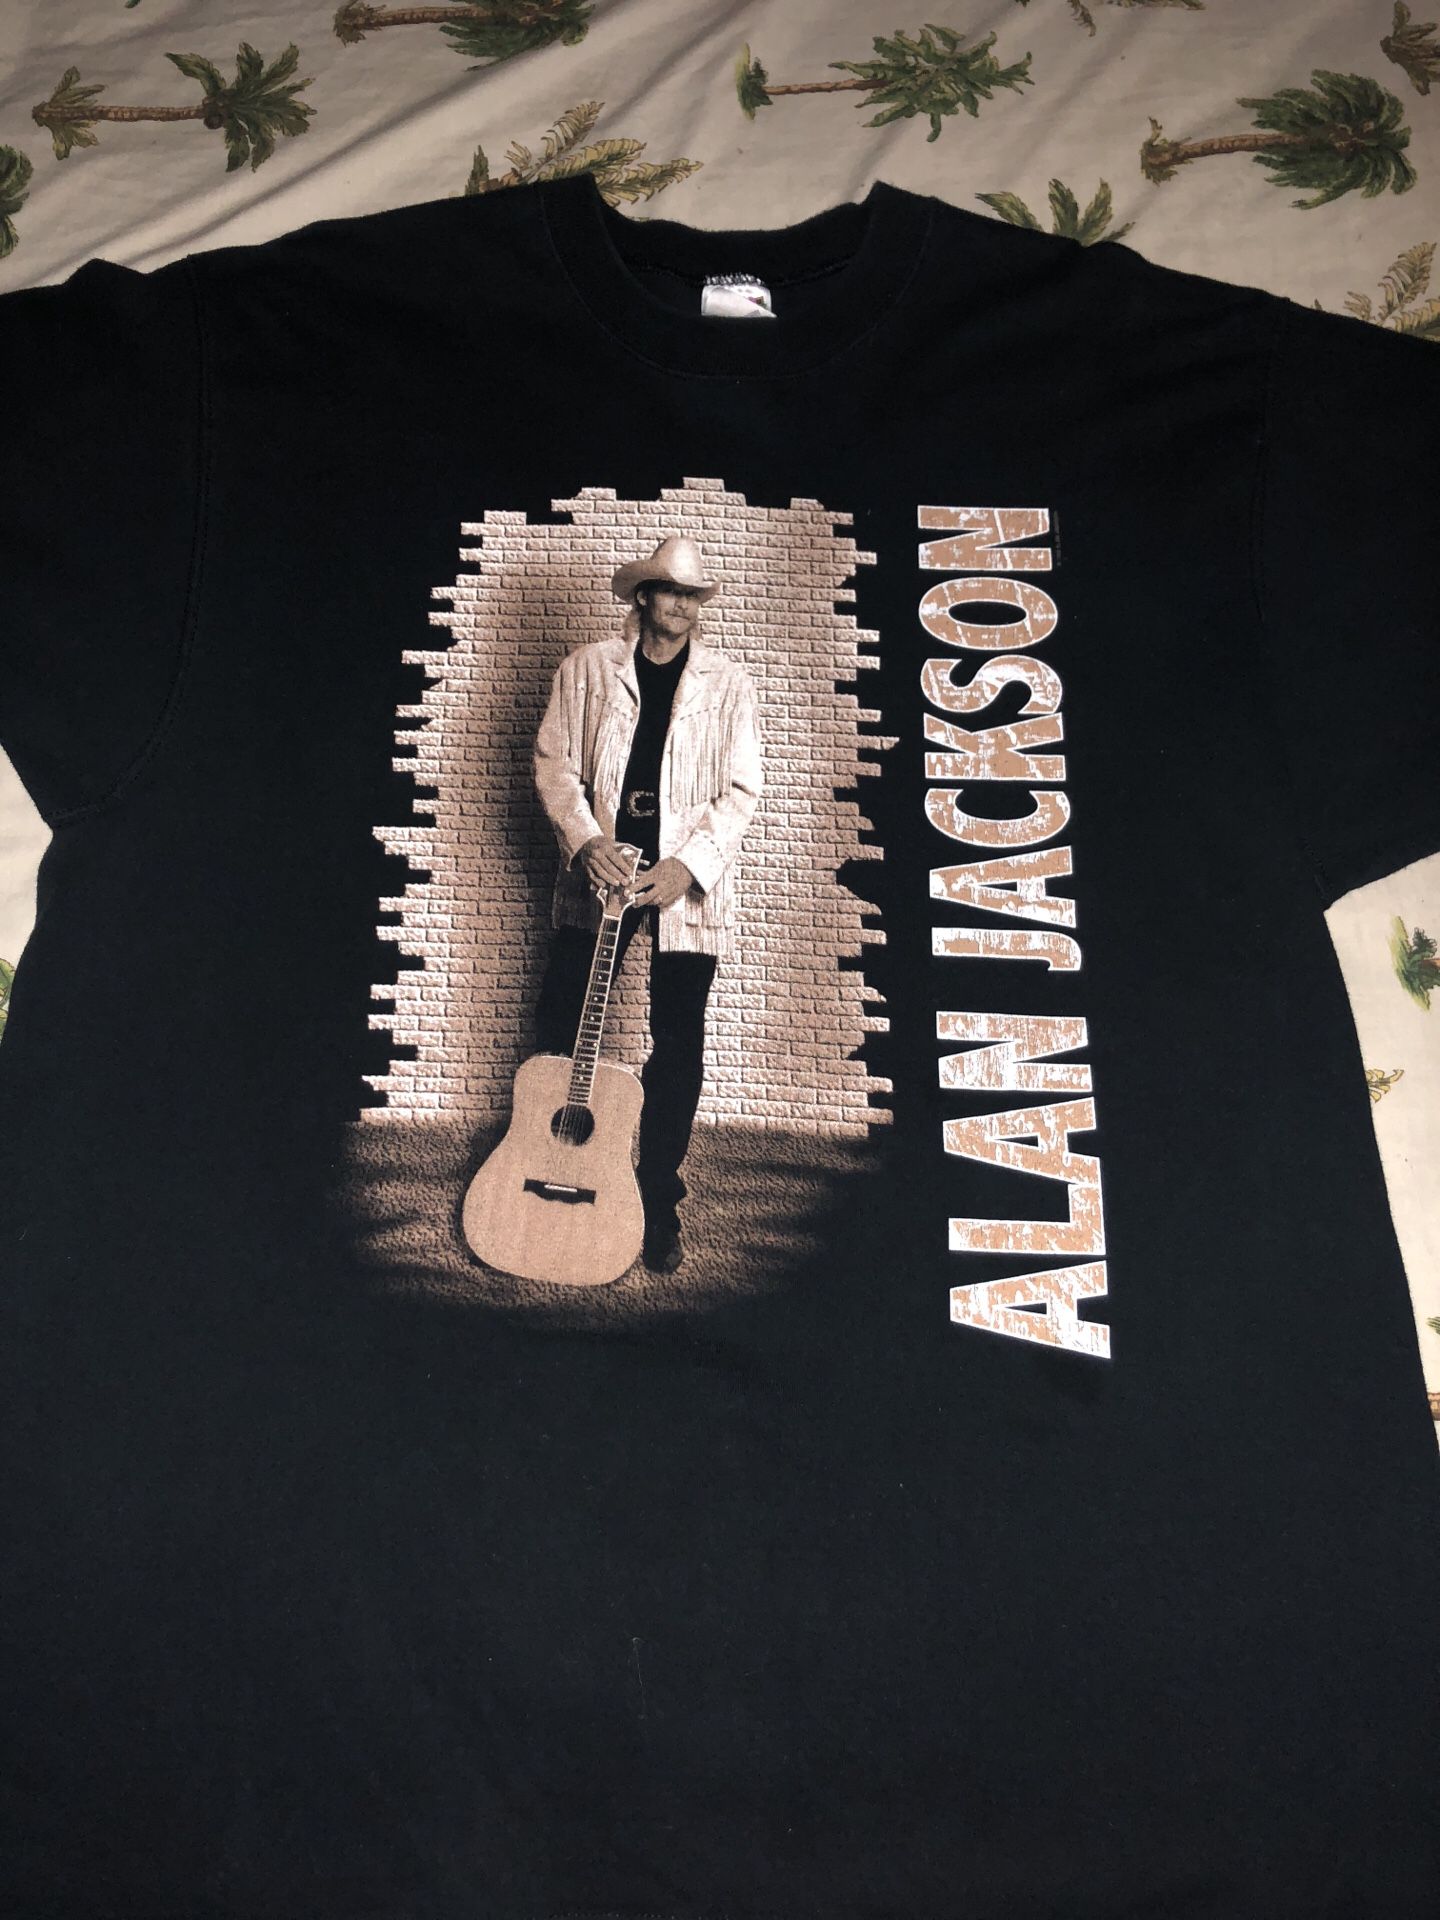 Made in USA Alan Jackson 1995 tour shirt large no flaws